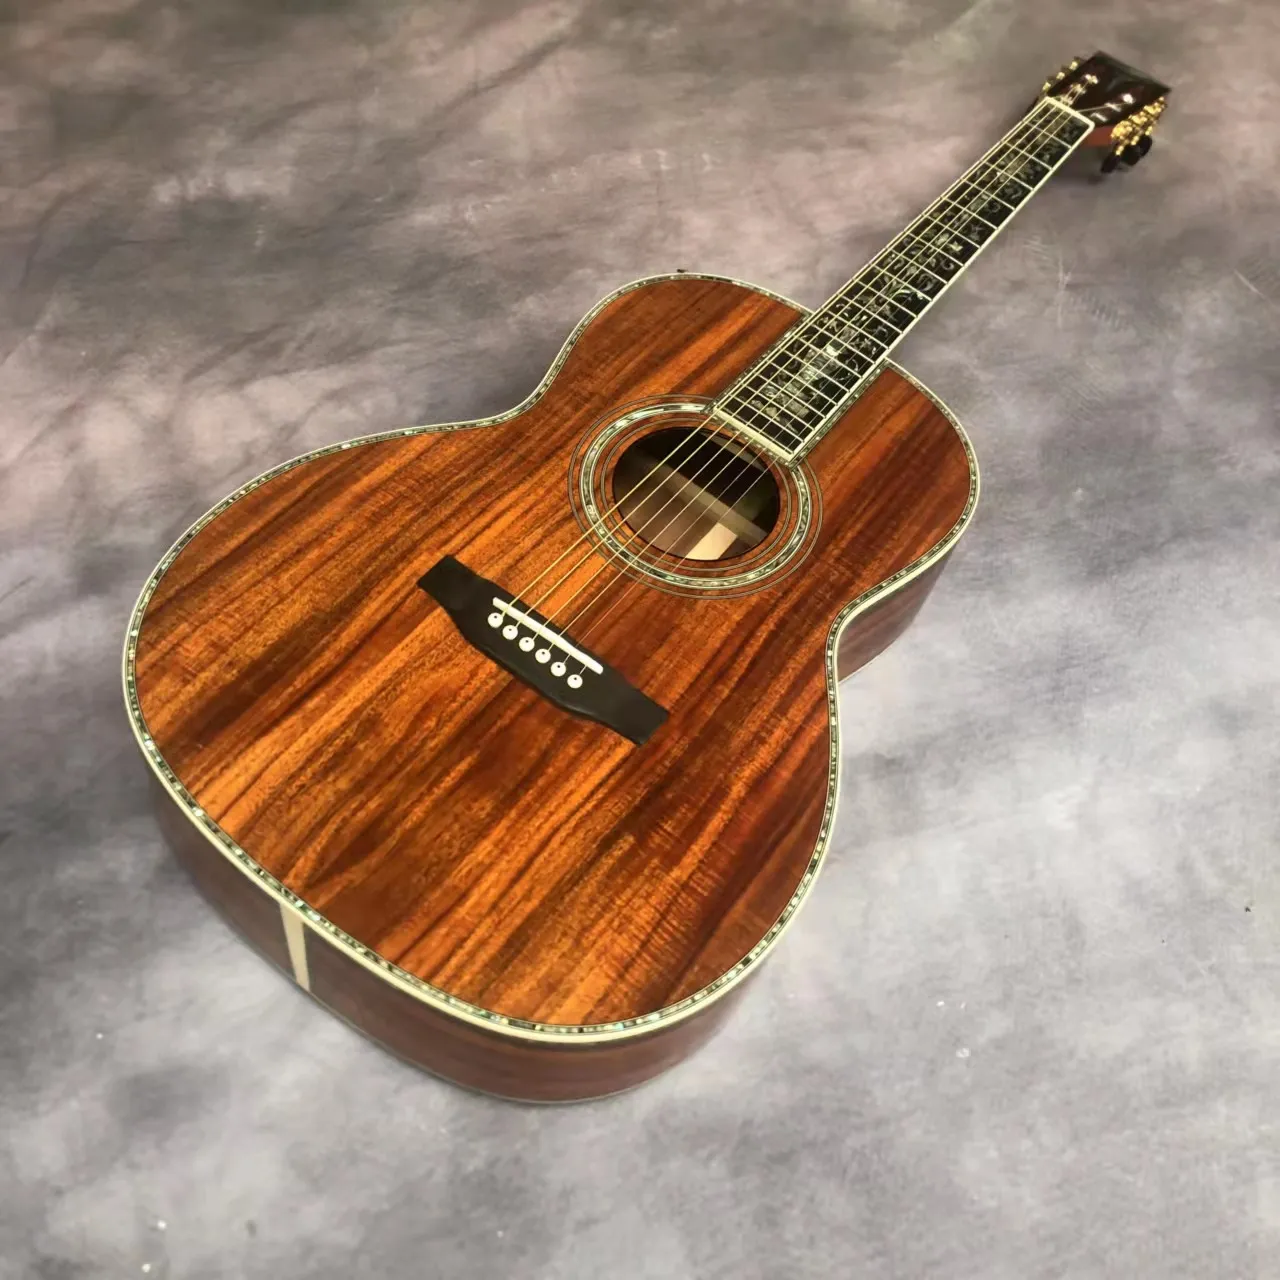 39 "Full koa Wood 0045 Luxury Black Finger Abalone shell Mosaico chitarra acustica acustica